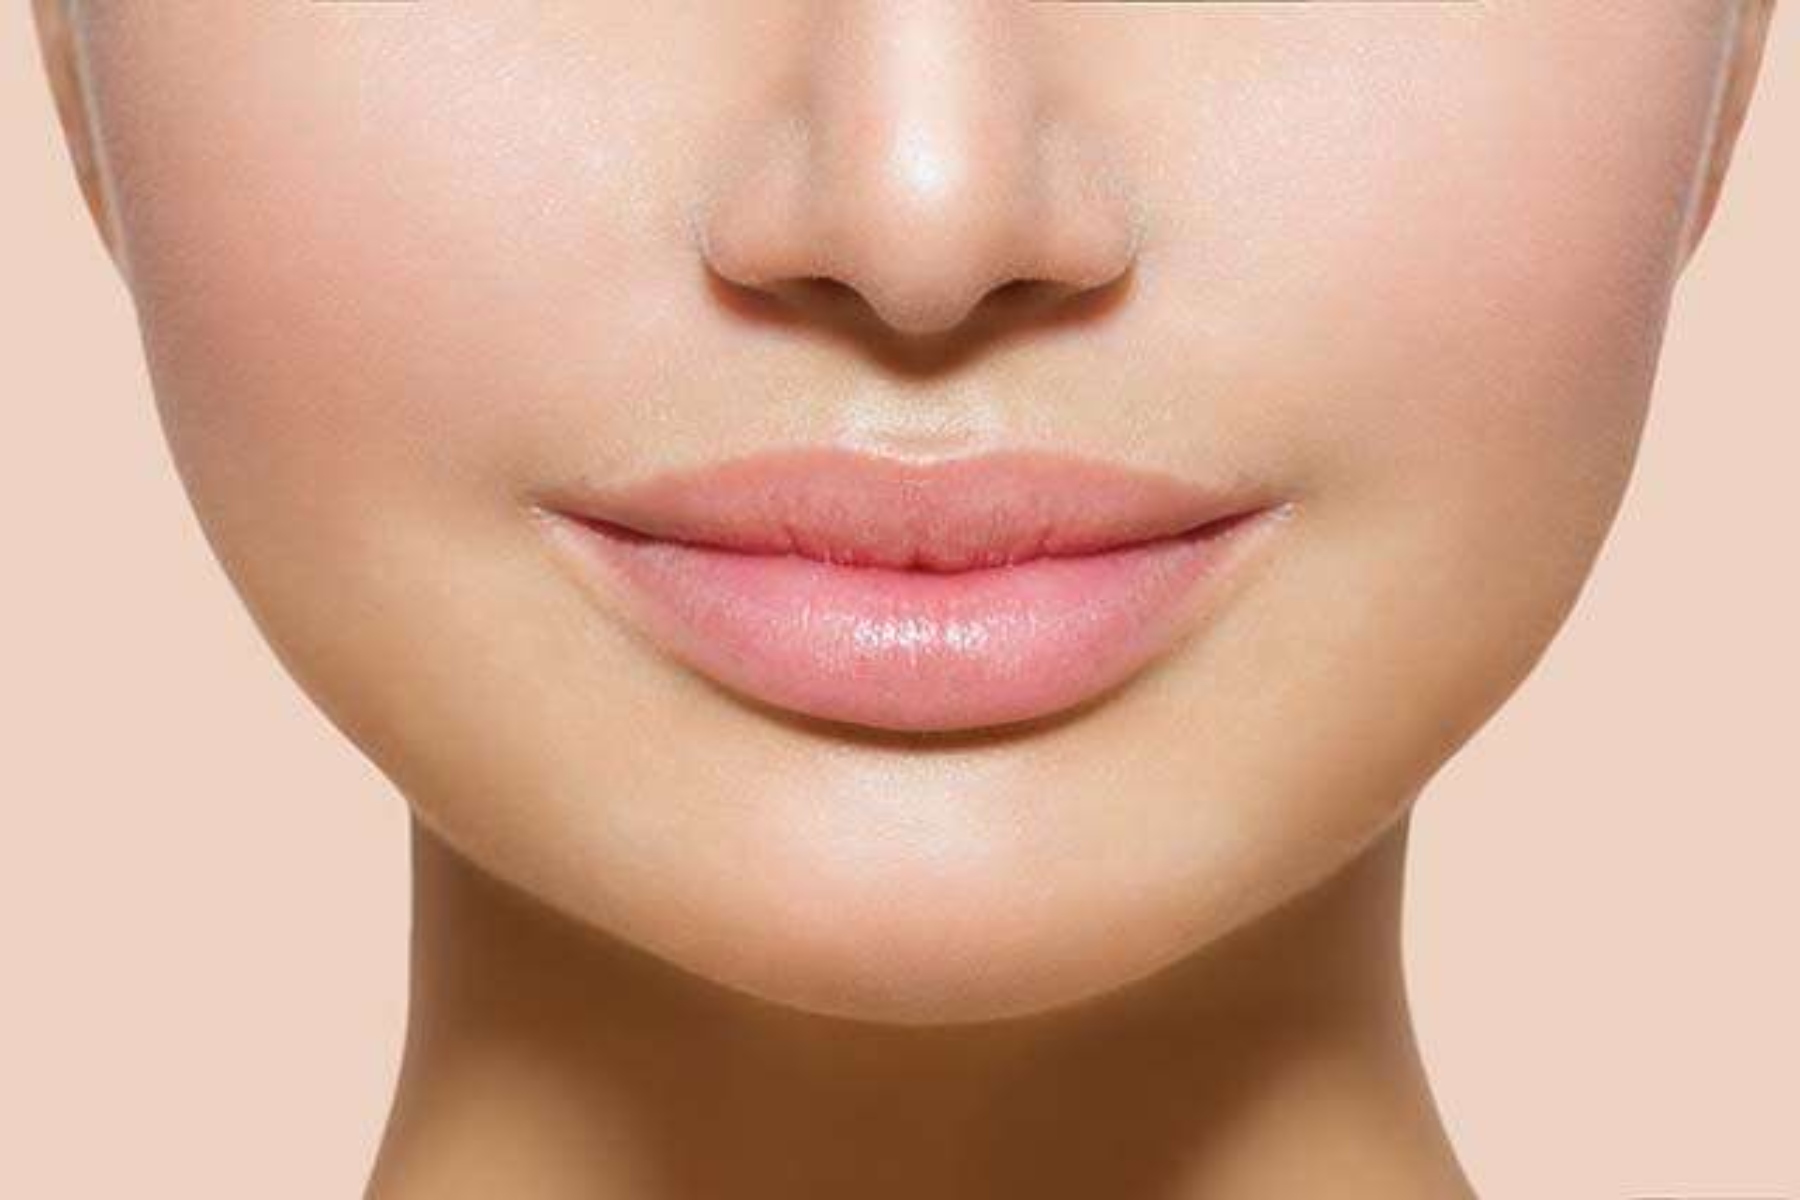 DIY χείλη ροζ: Πώς να αποκτήσετε ροζ χείλη στο σπίτι;